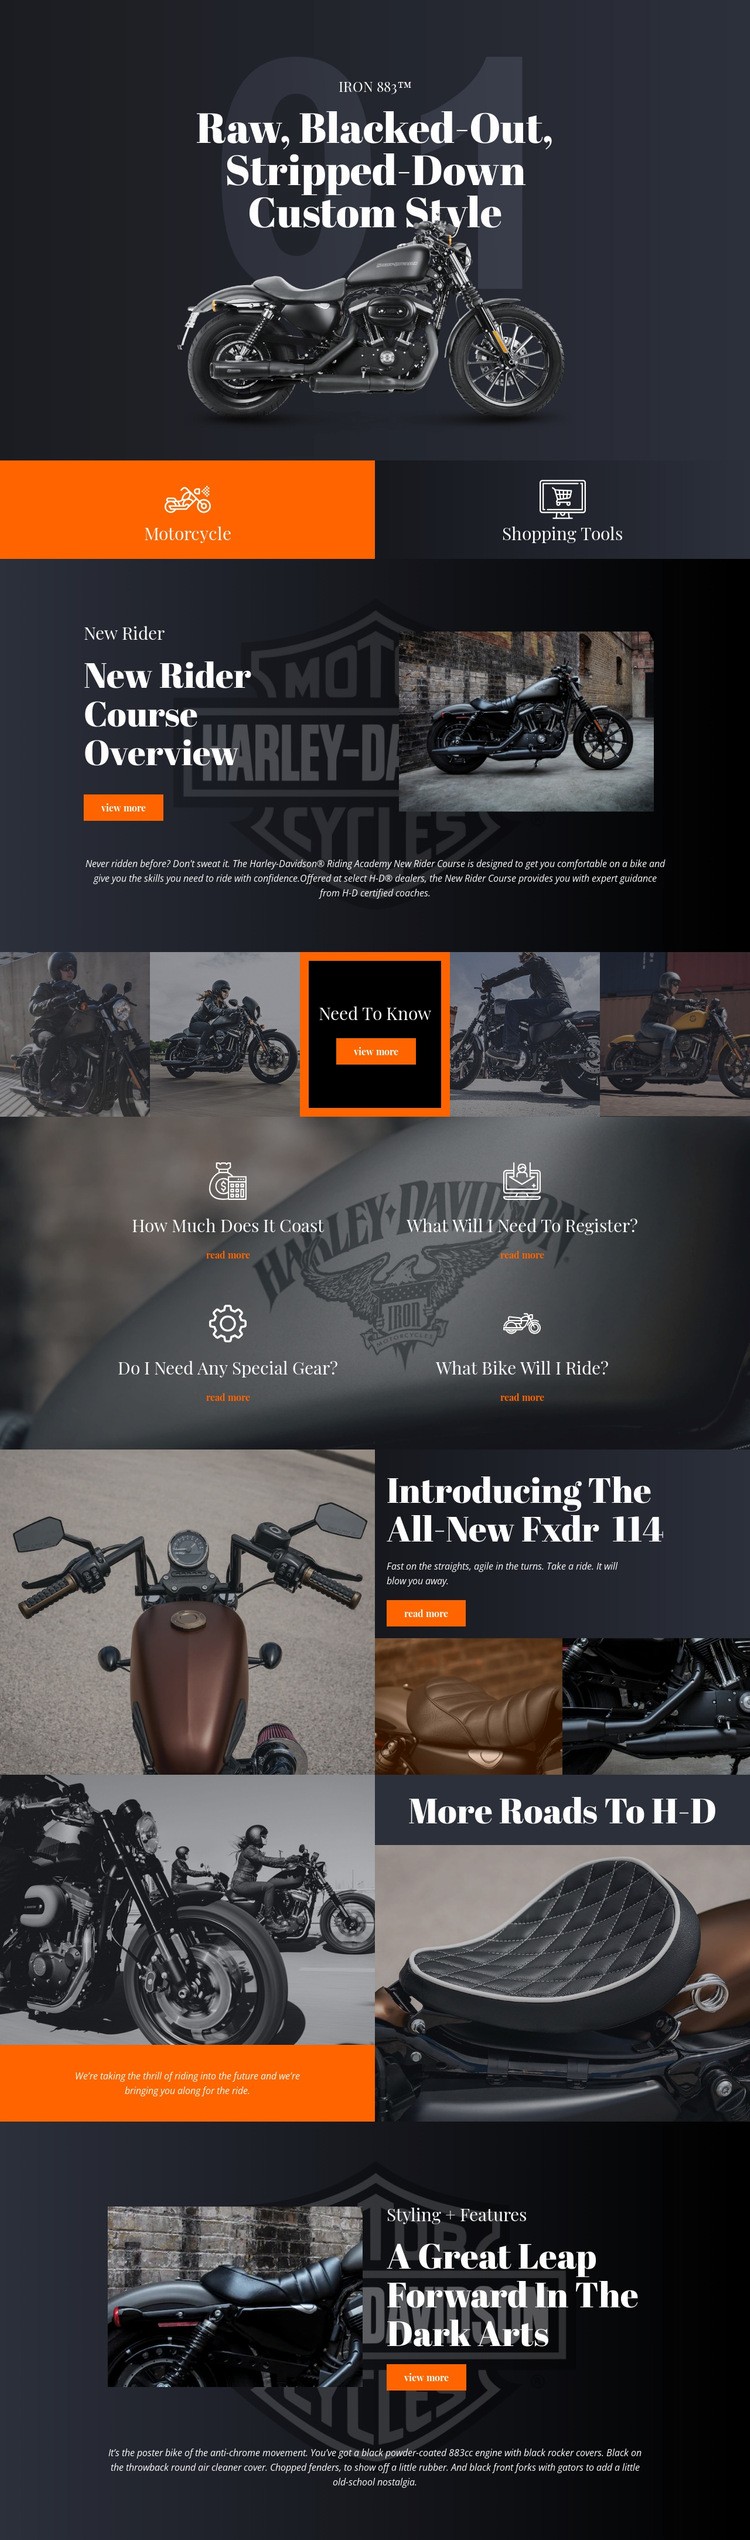 Harley Davidson Html webbplatsbyggare